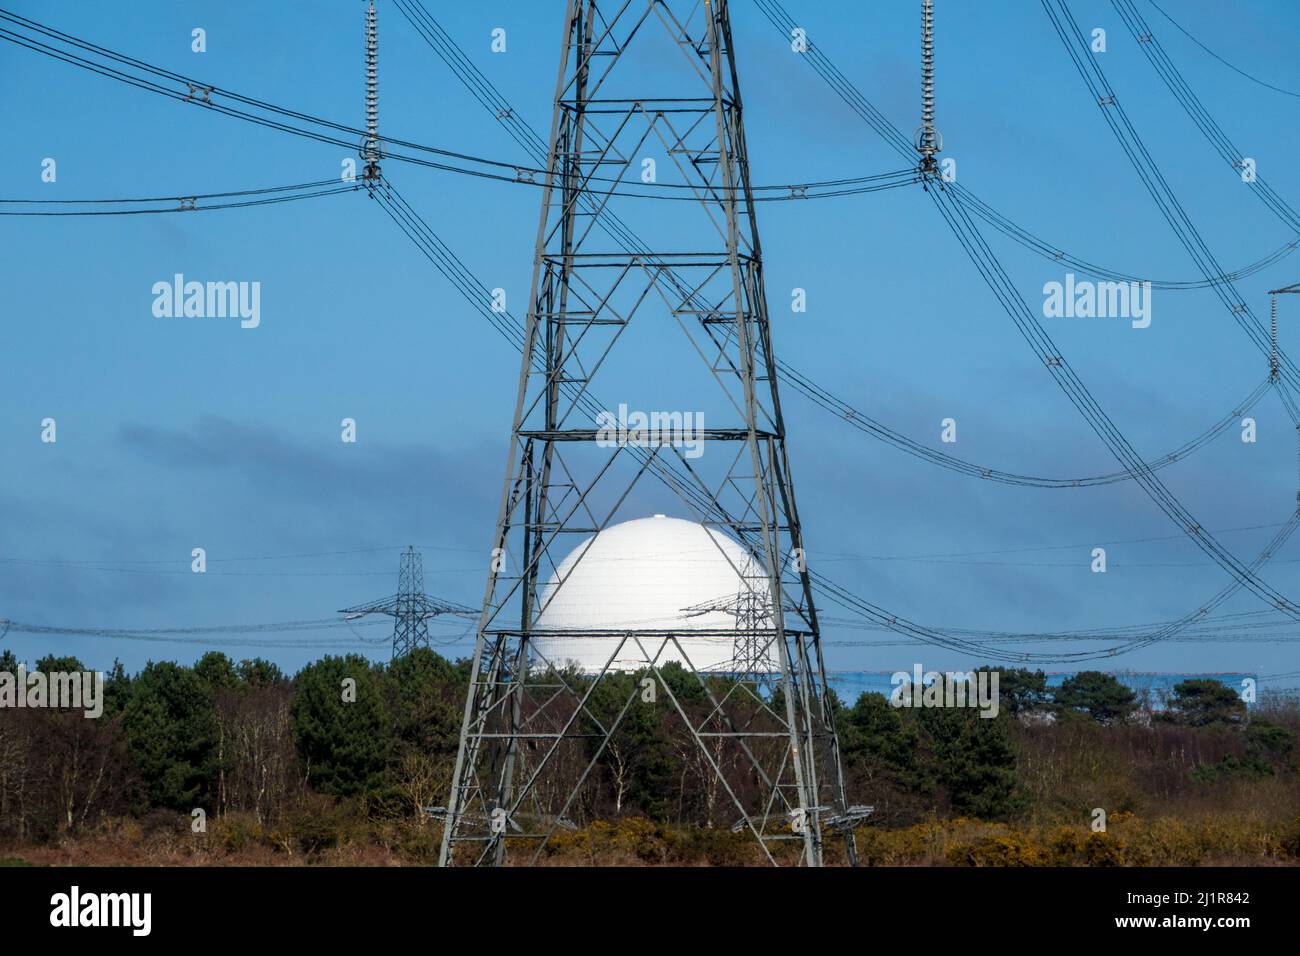 La cúpula blanca de la central nuclear de Sizewell vista a través del marco metálico de un pilón Foto de stock